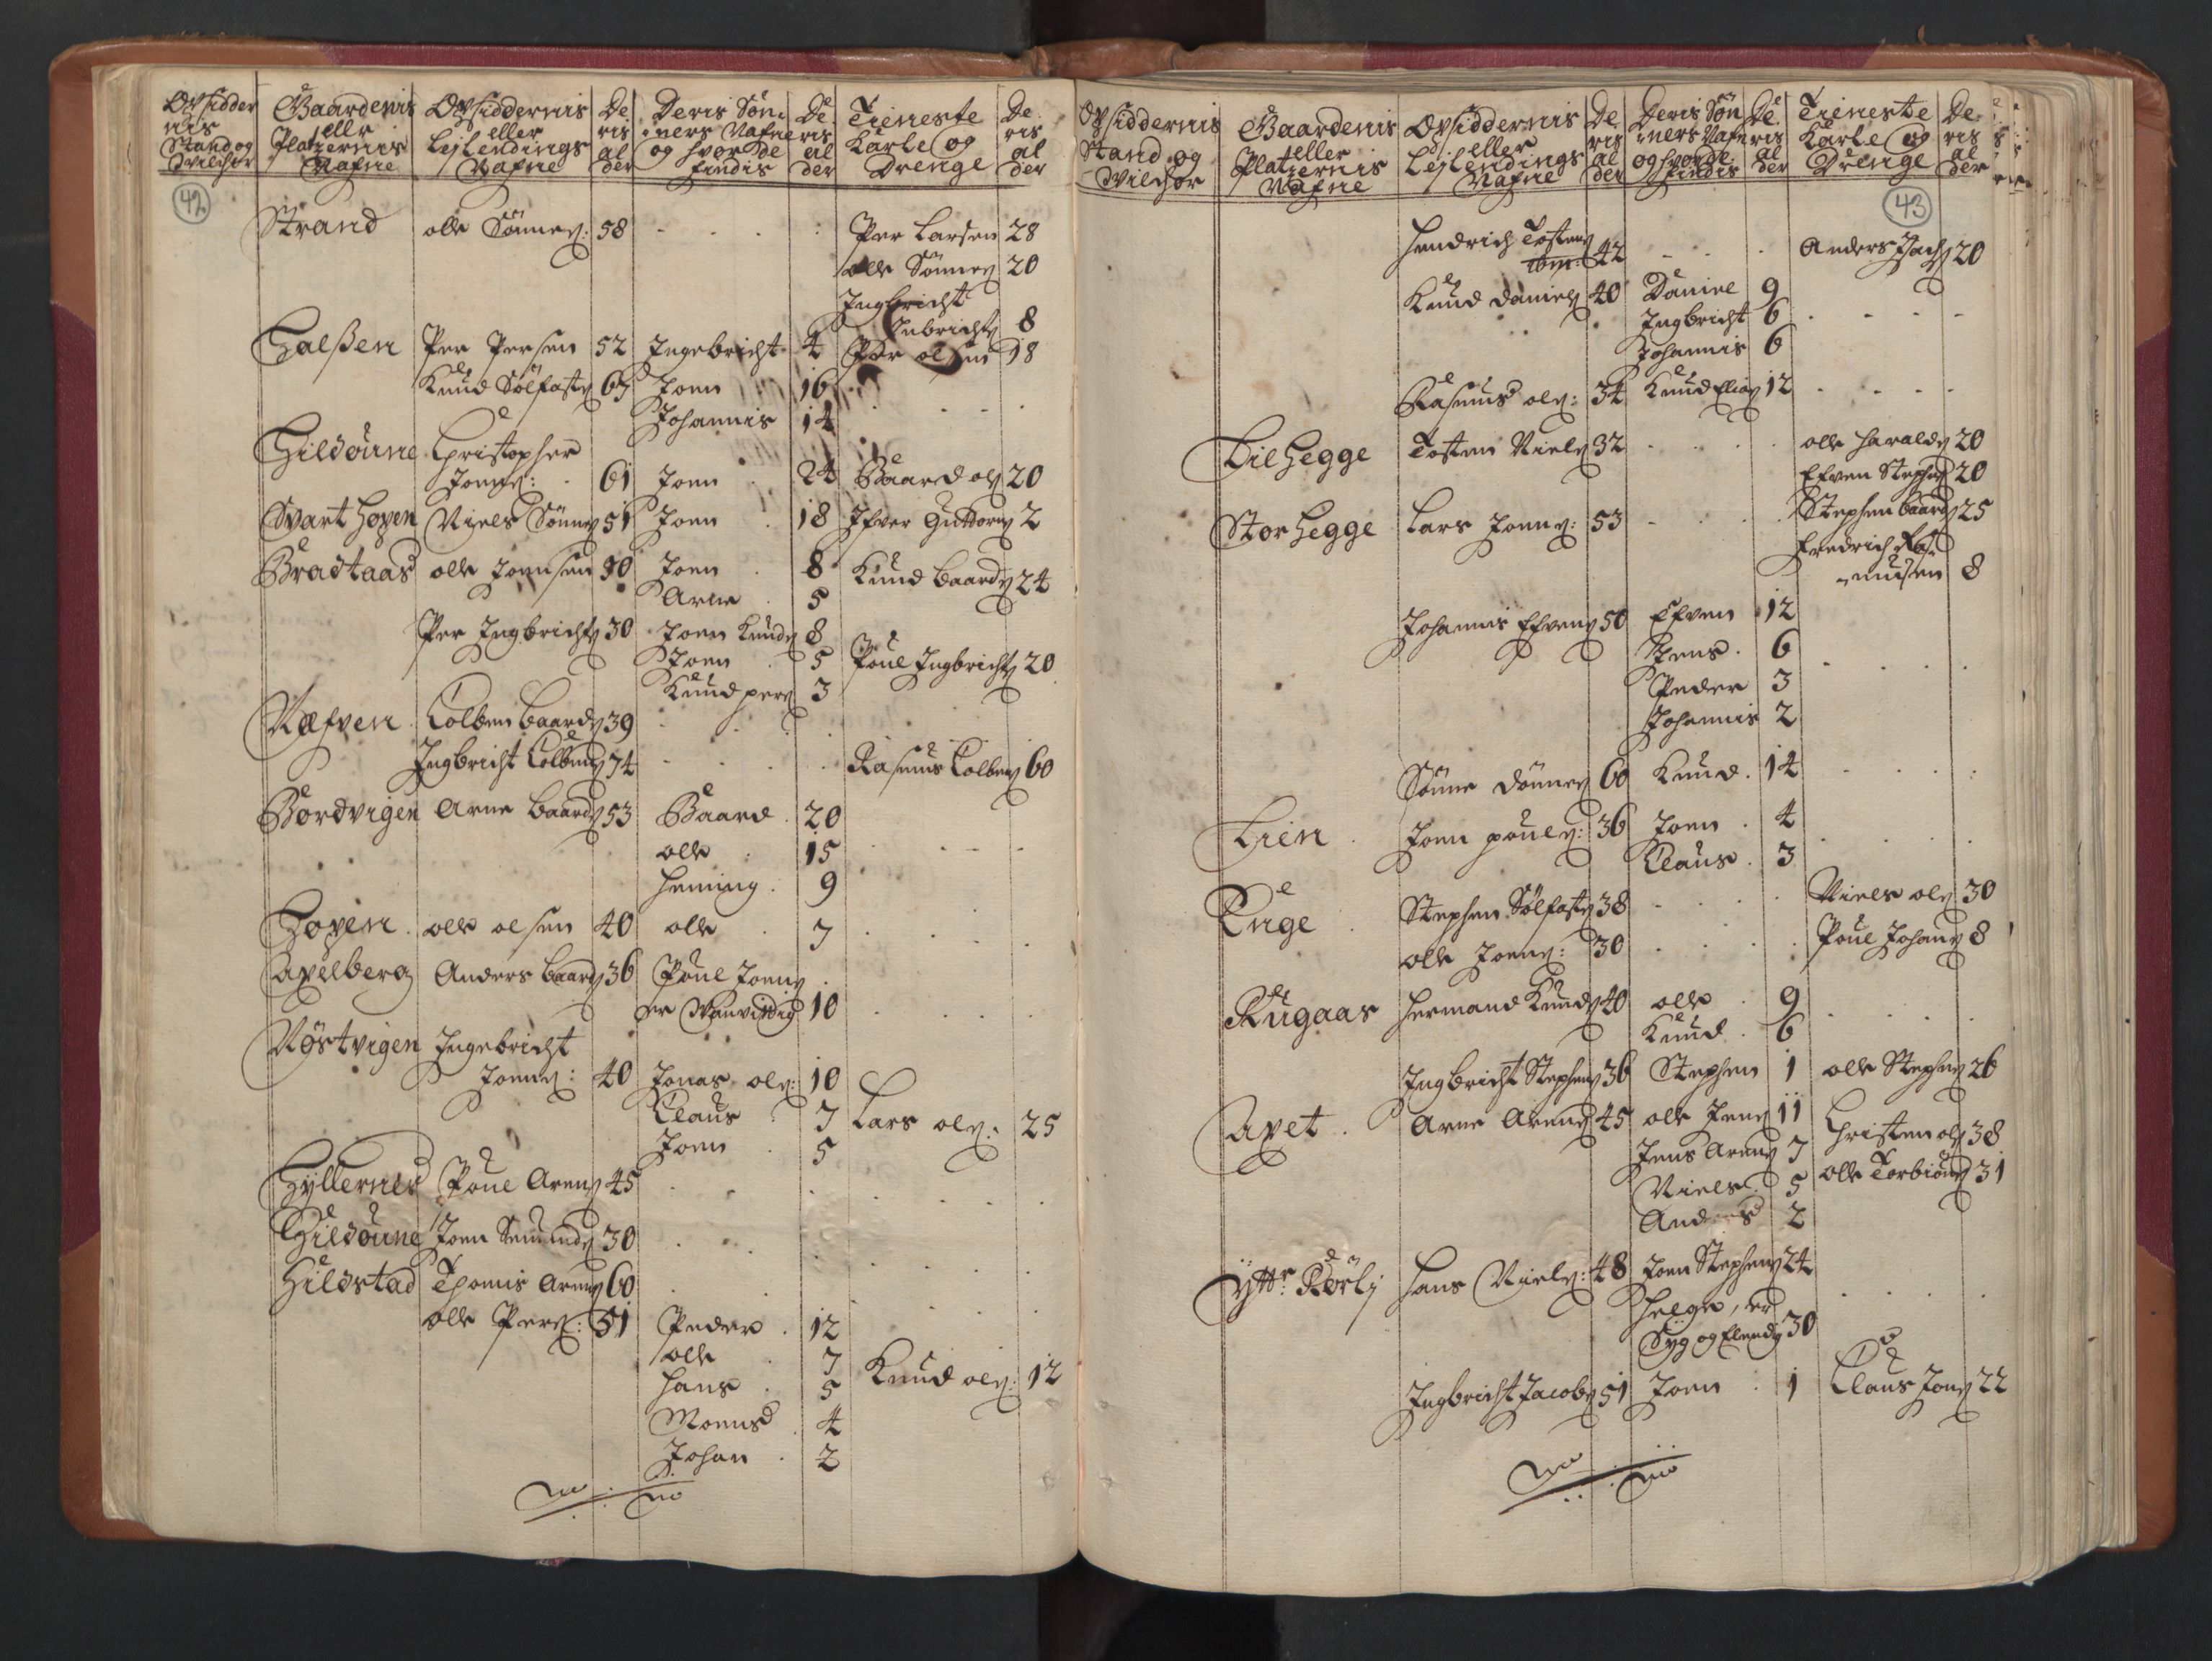 RA, Census (manntall) 1701, no. 16: Helgeland fogderi, 1701, p. 42-43